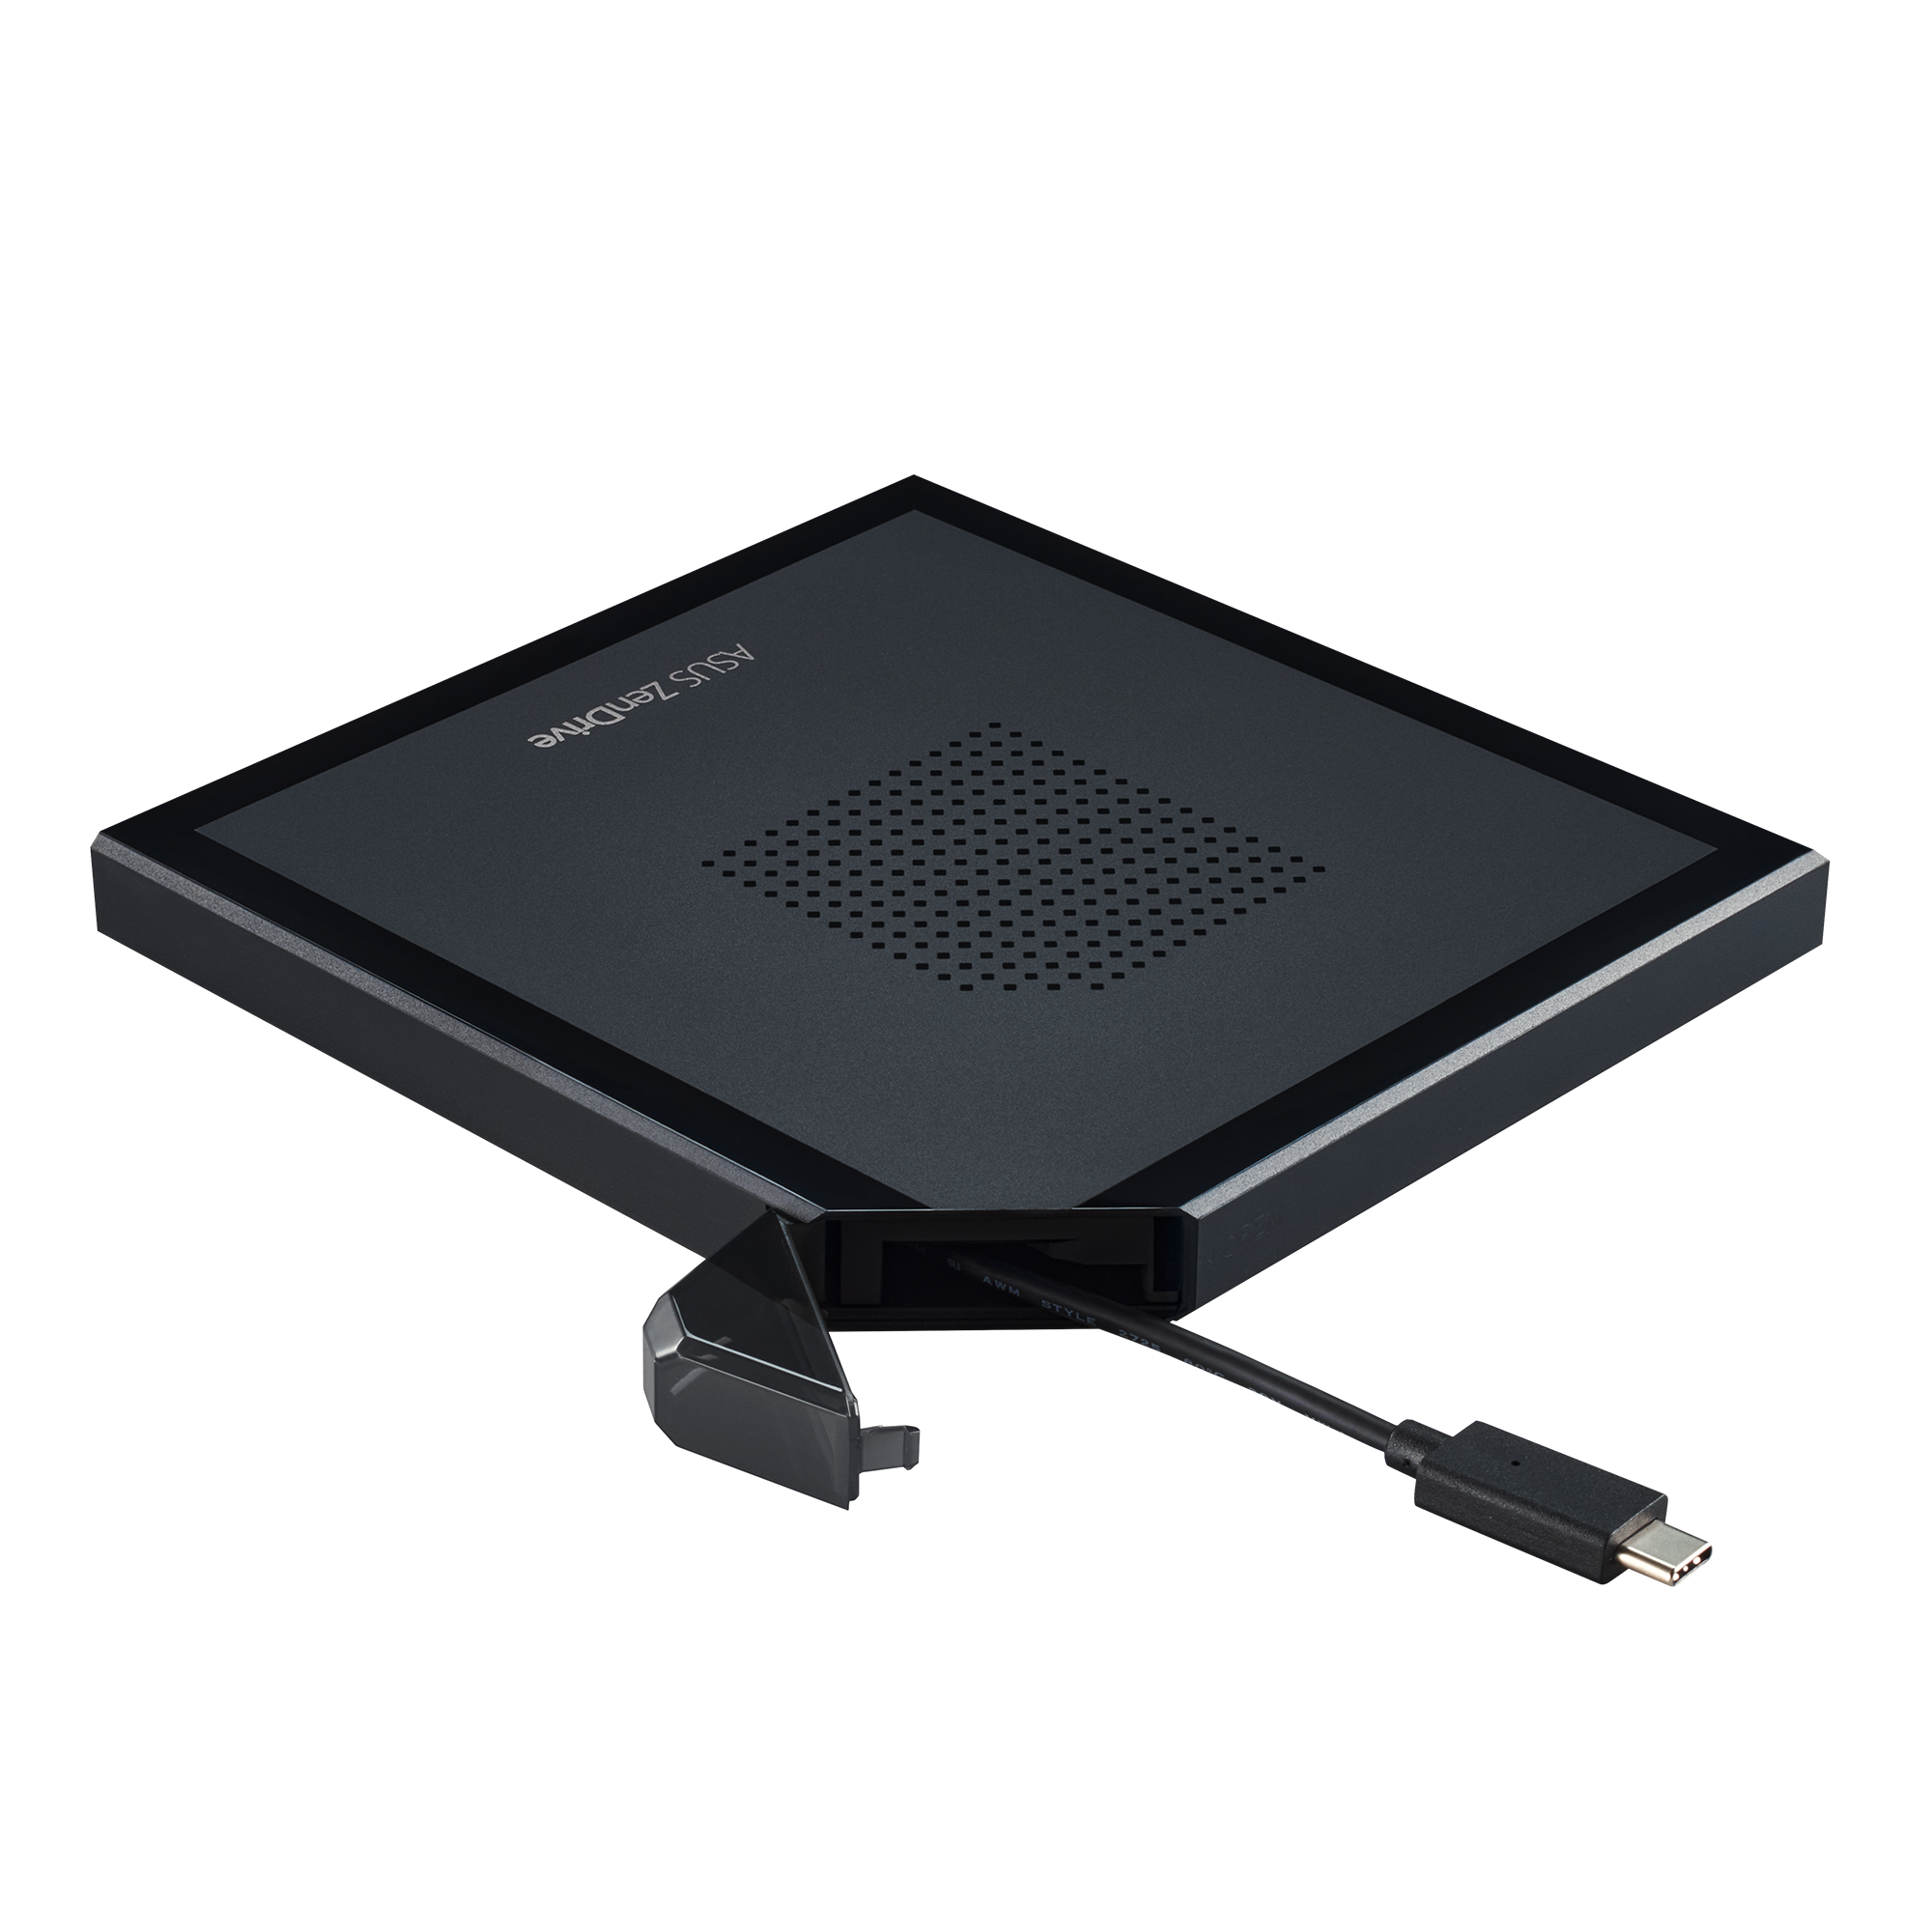 ASUS ZenDrive V1M (SDRW-08V1M-U) external DVD drive and burner thumbnail 4